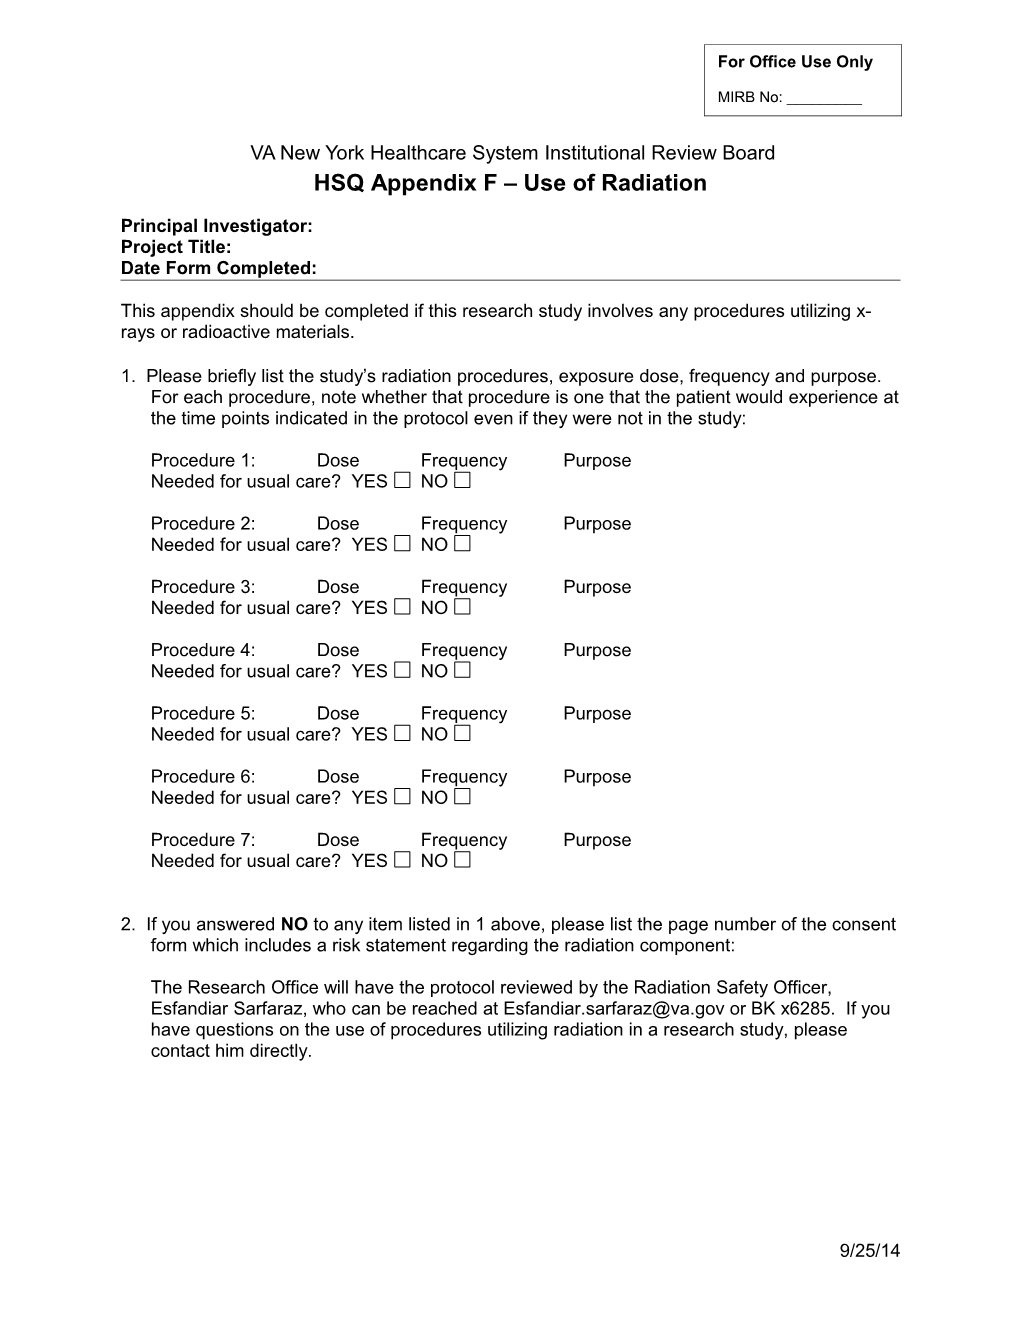 HSQ Appendix F - Use of Radiation